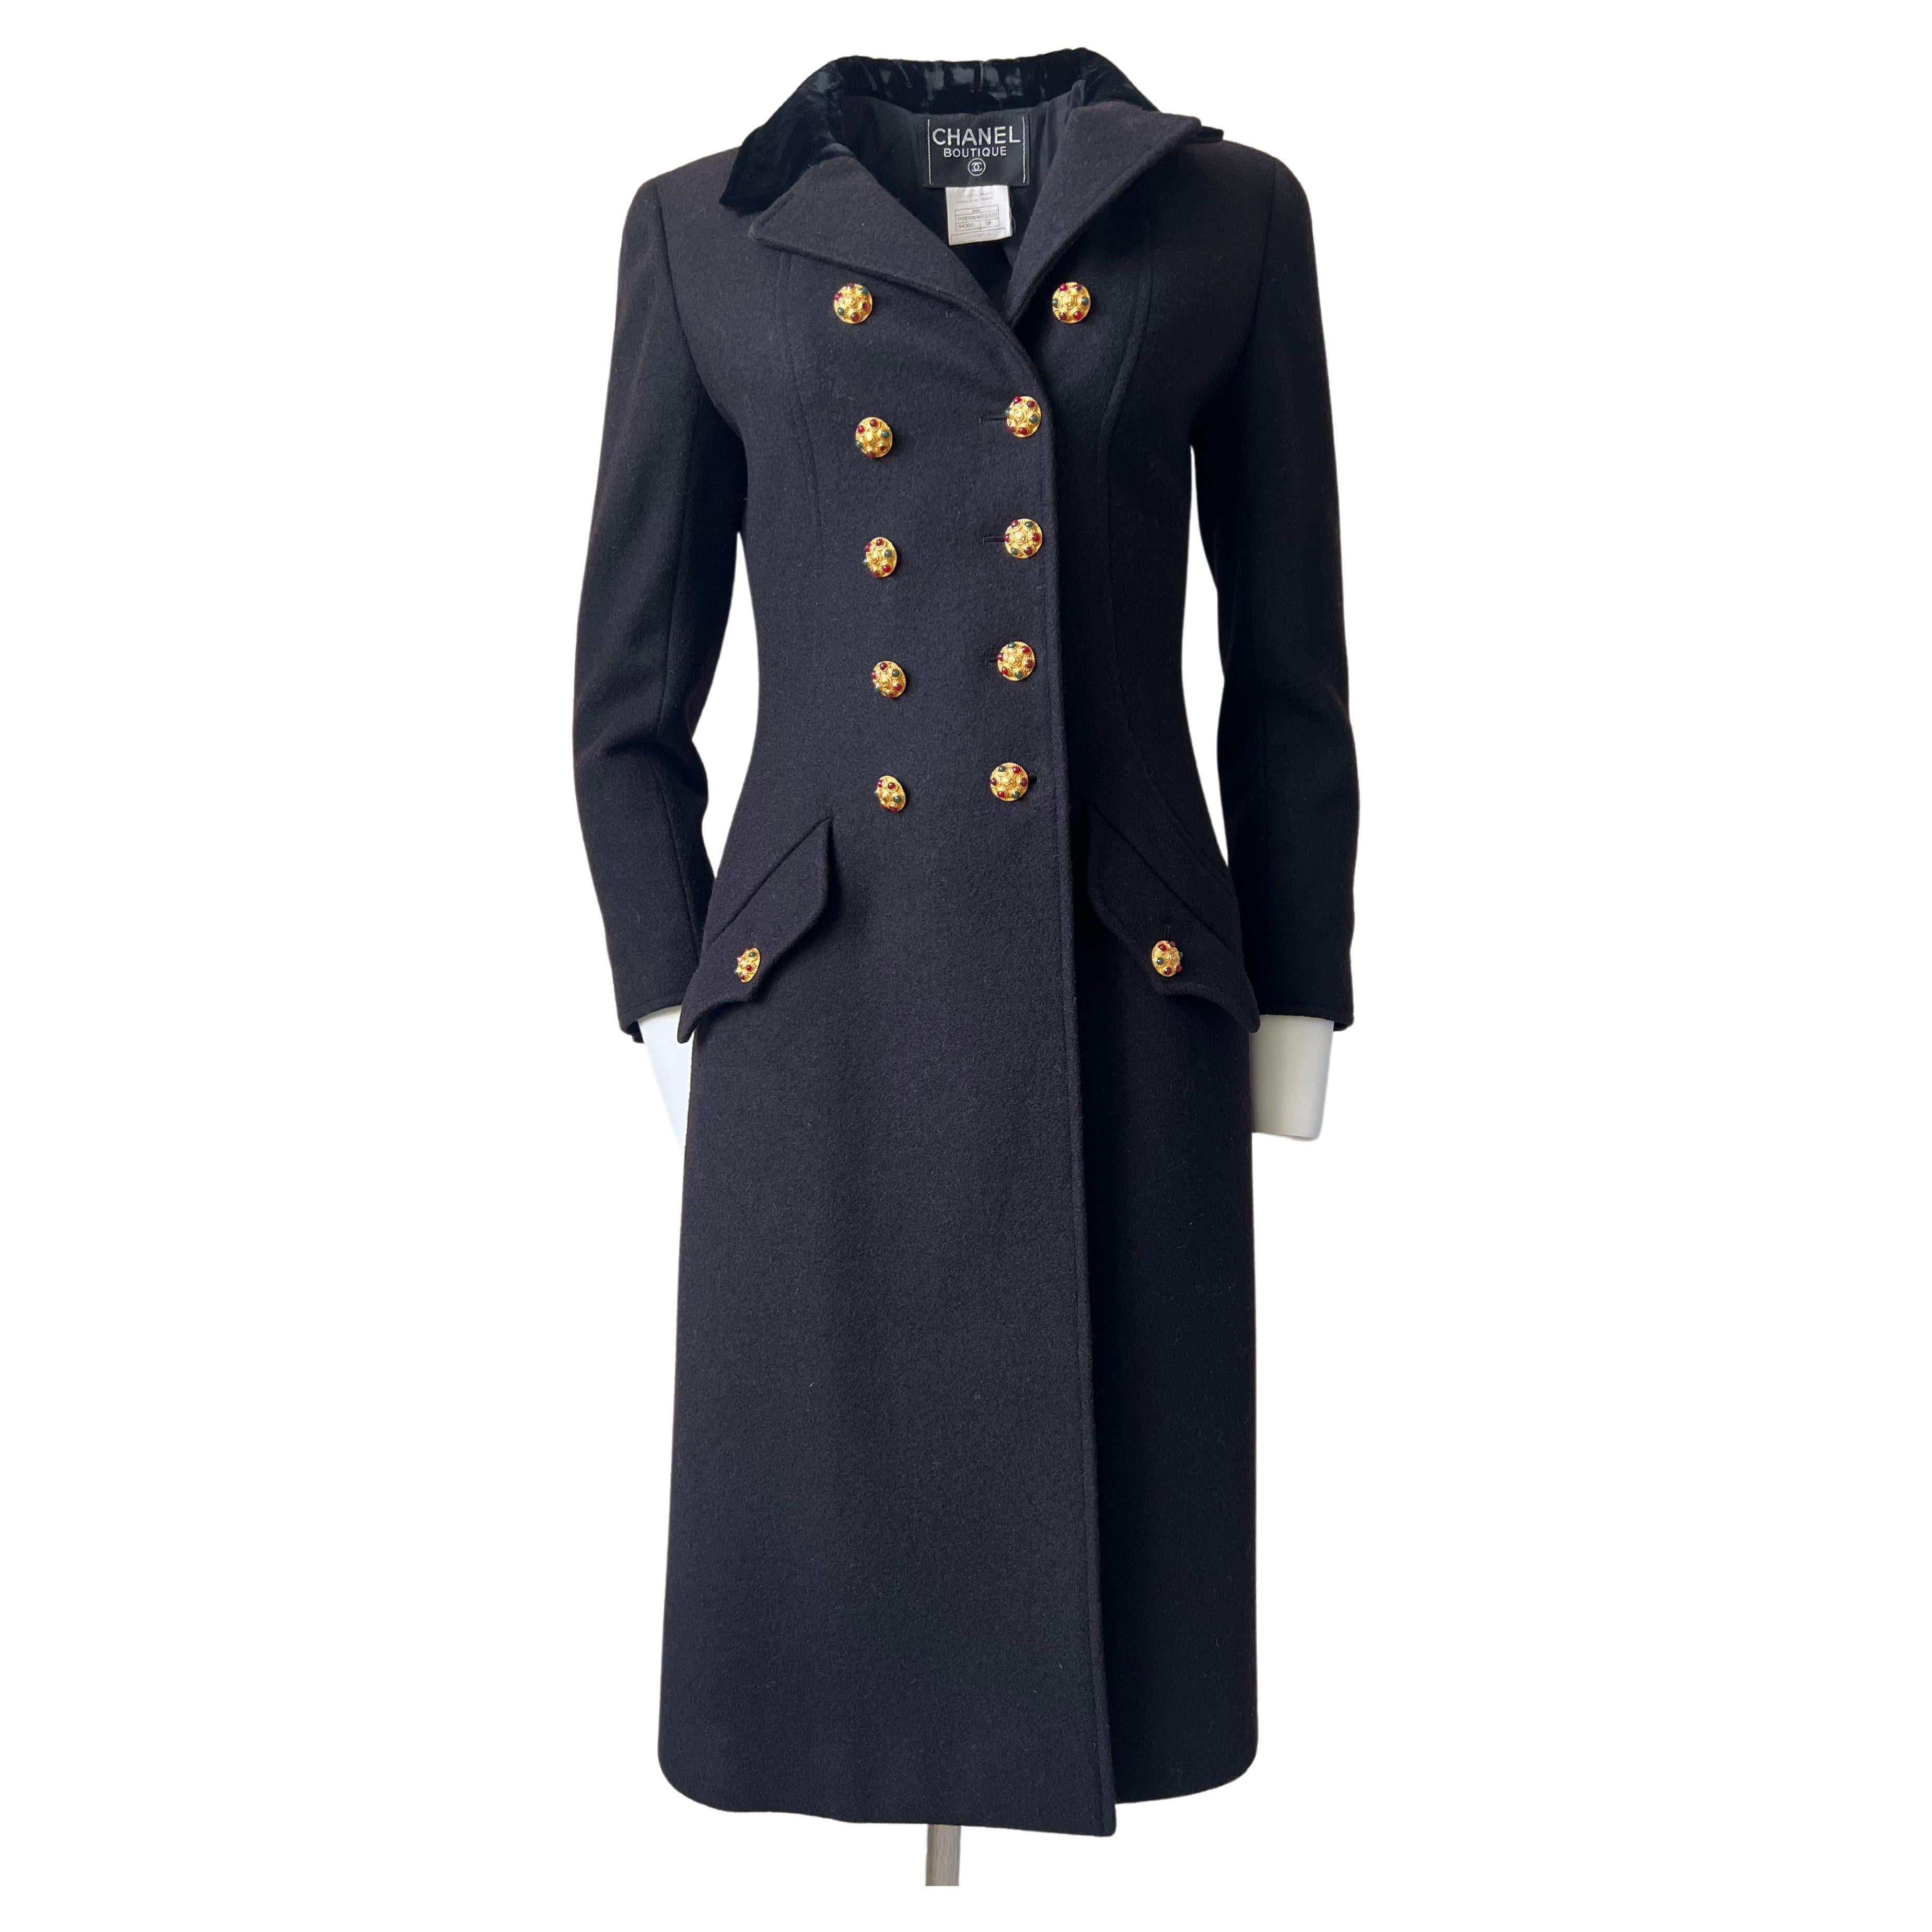 Black Wool and Velvet  Officier Coat, Gripoix Jewels Buttons, Chanel  1996 A 